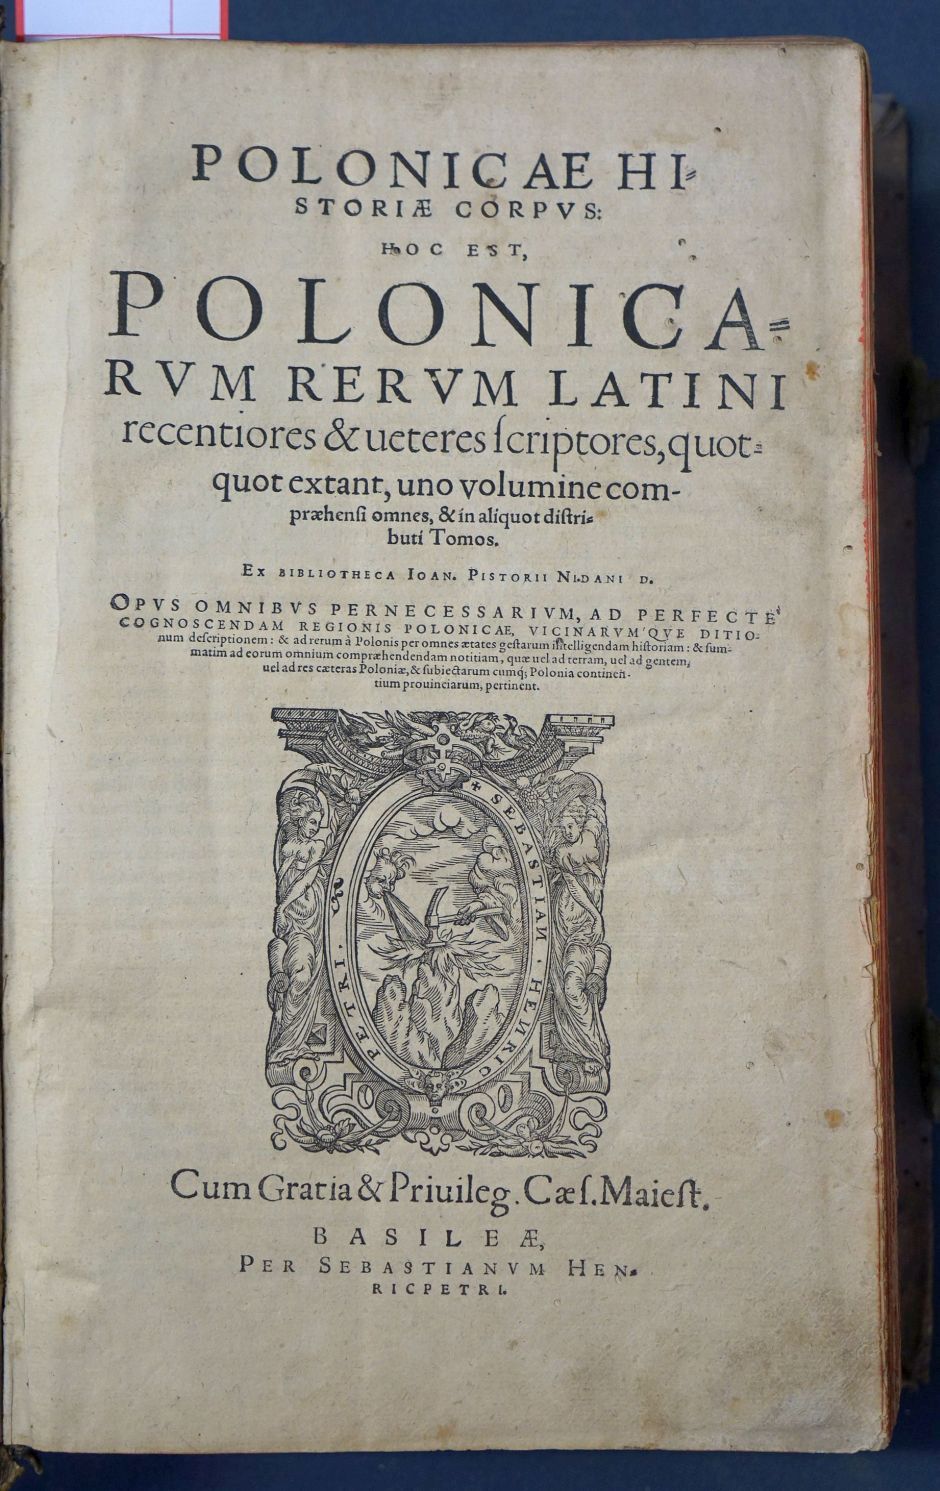 Lot 1169, Auction  115, Pistorius, Johann, Polonicae historiae corpus